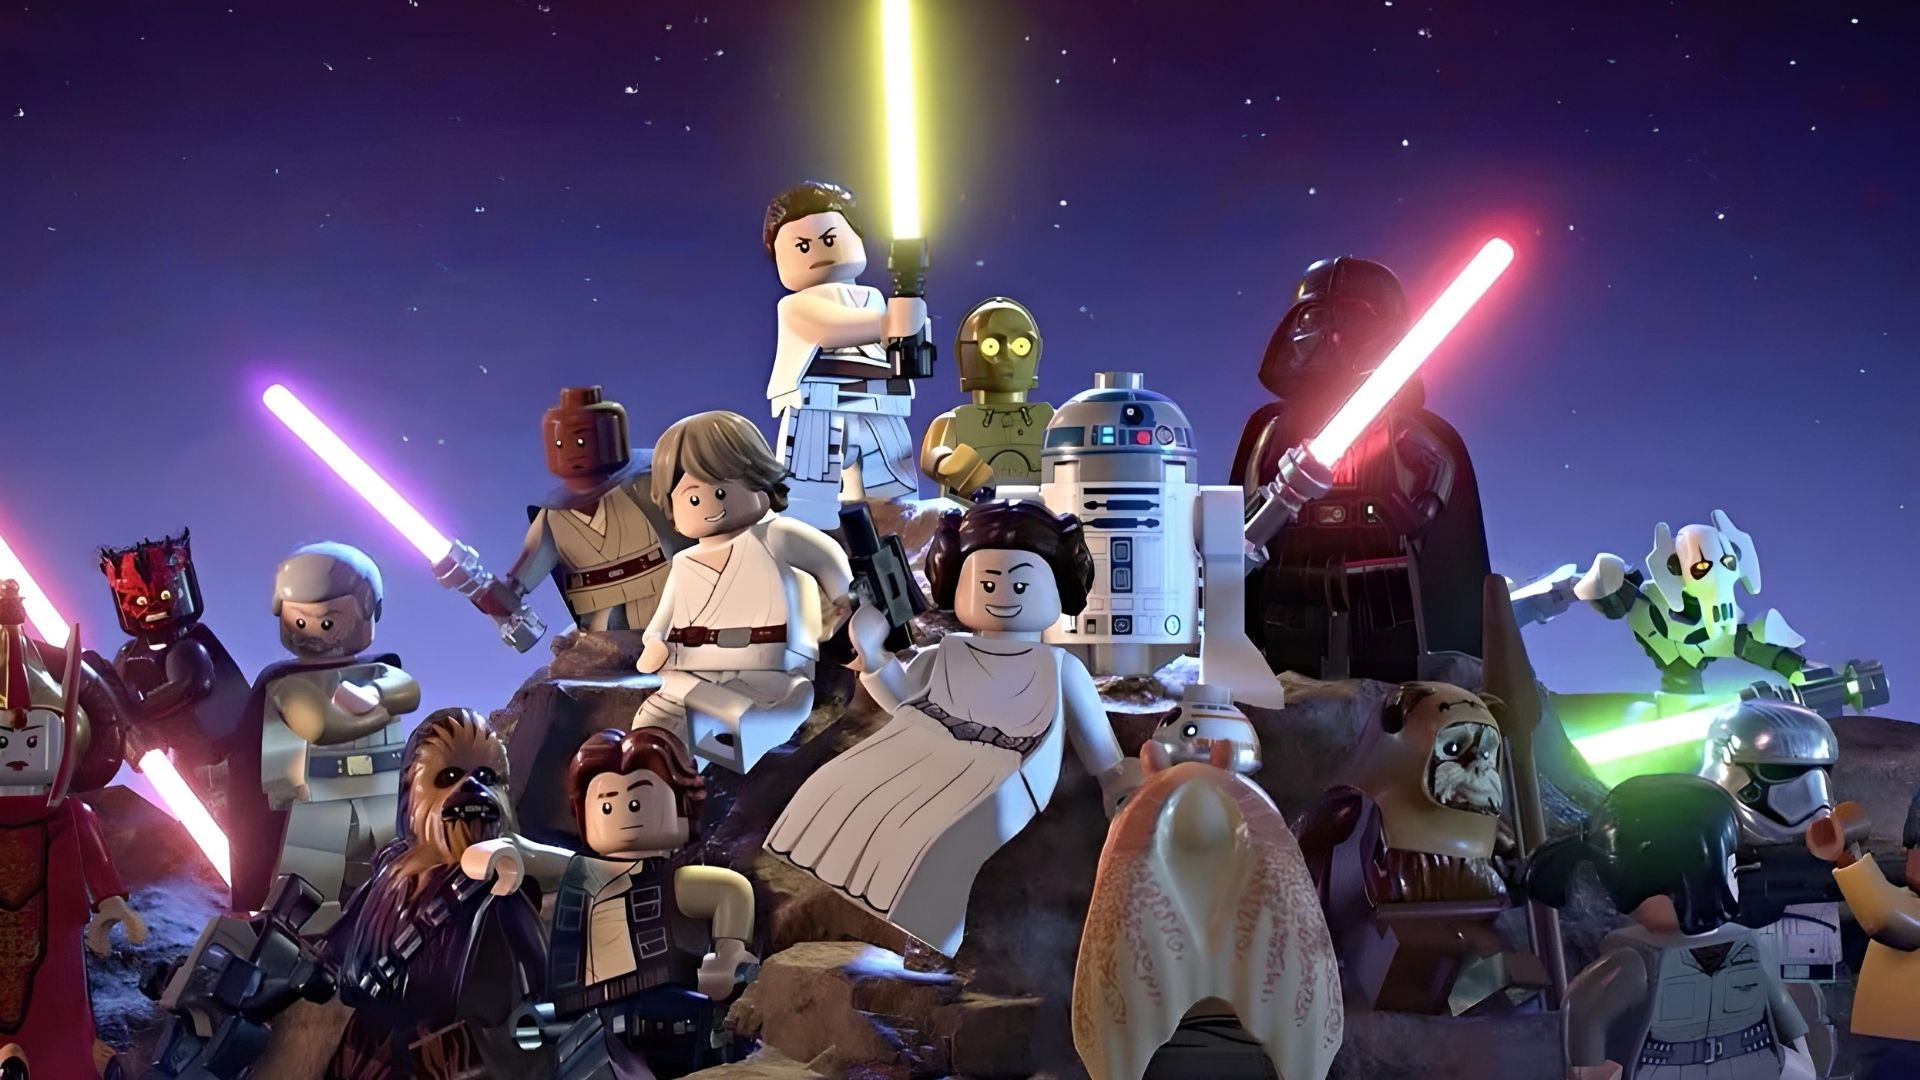 Ud jurist pakistanske All the Lego Star Wars: The Skywalker Saga characters | Pocket Tactics